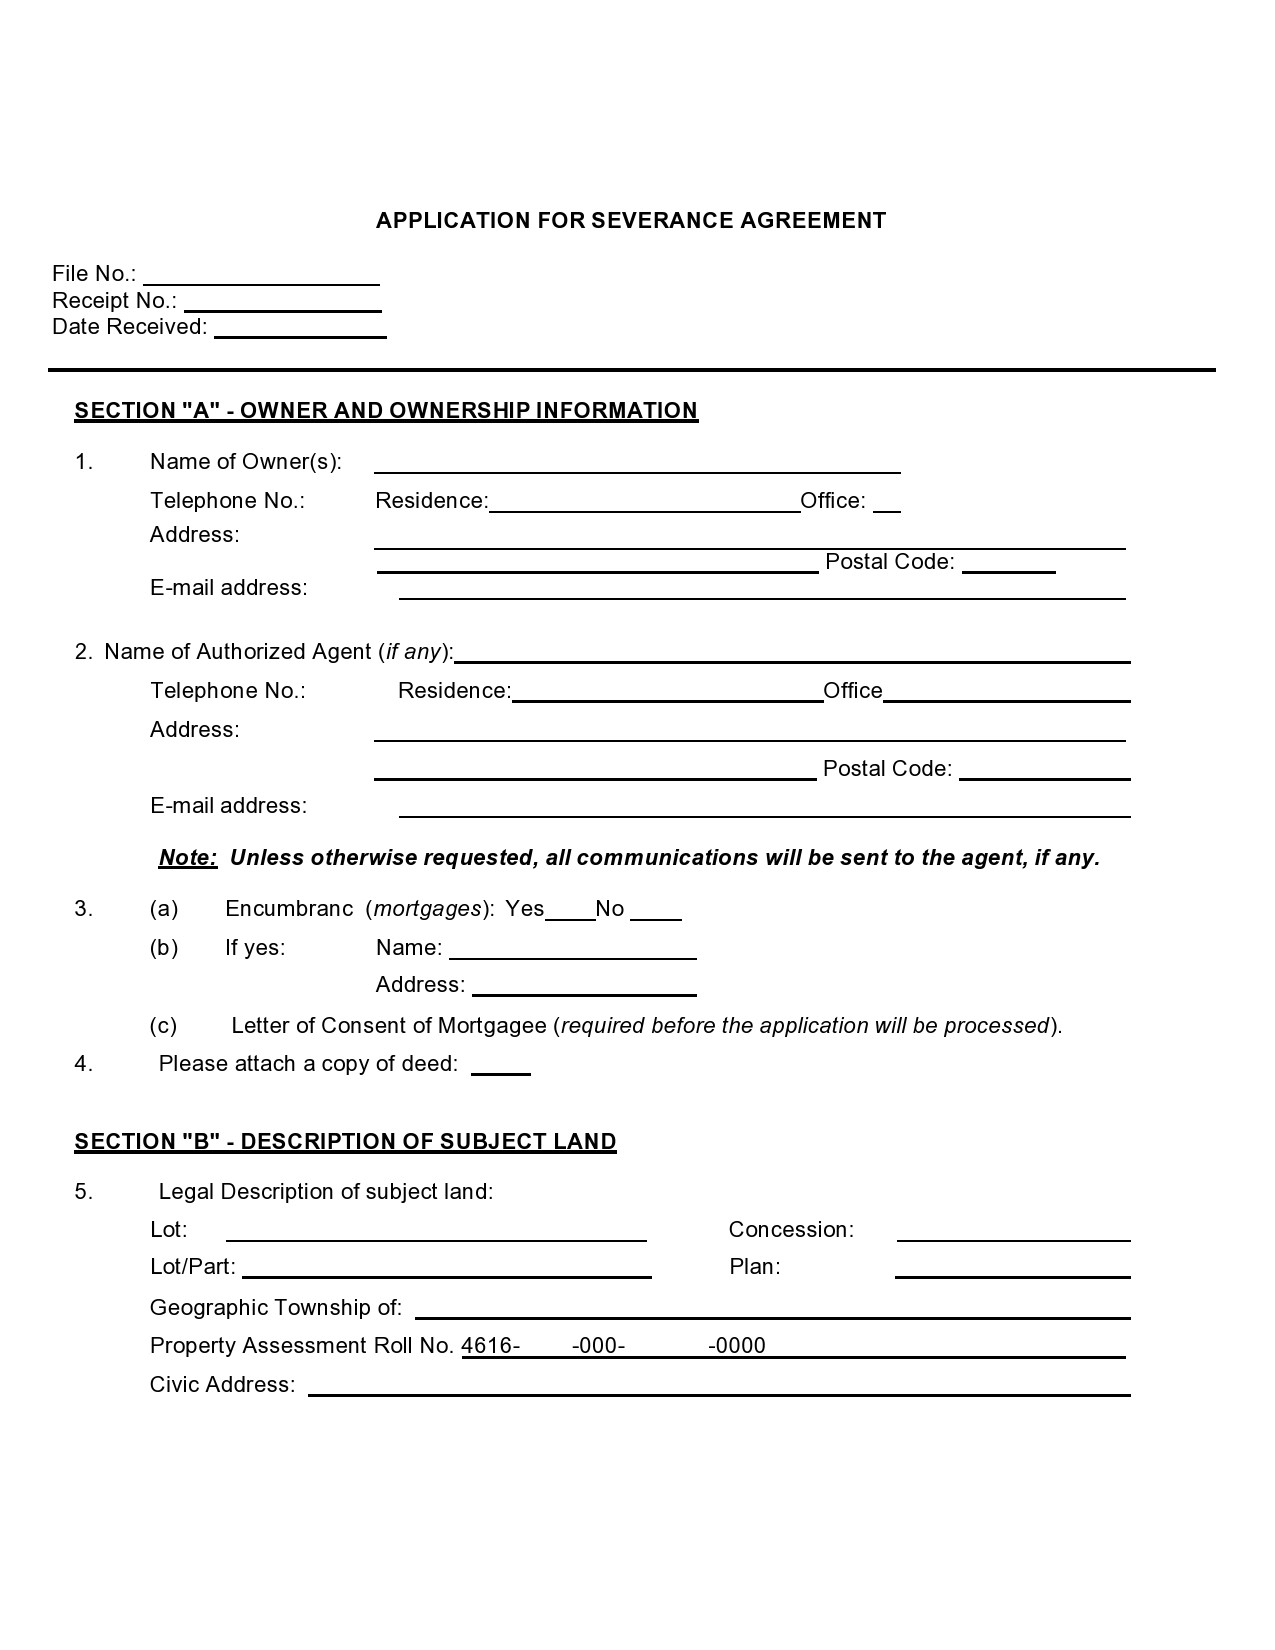 Free severance agreement template 33